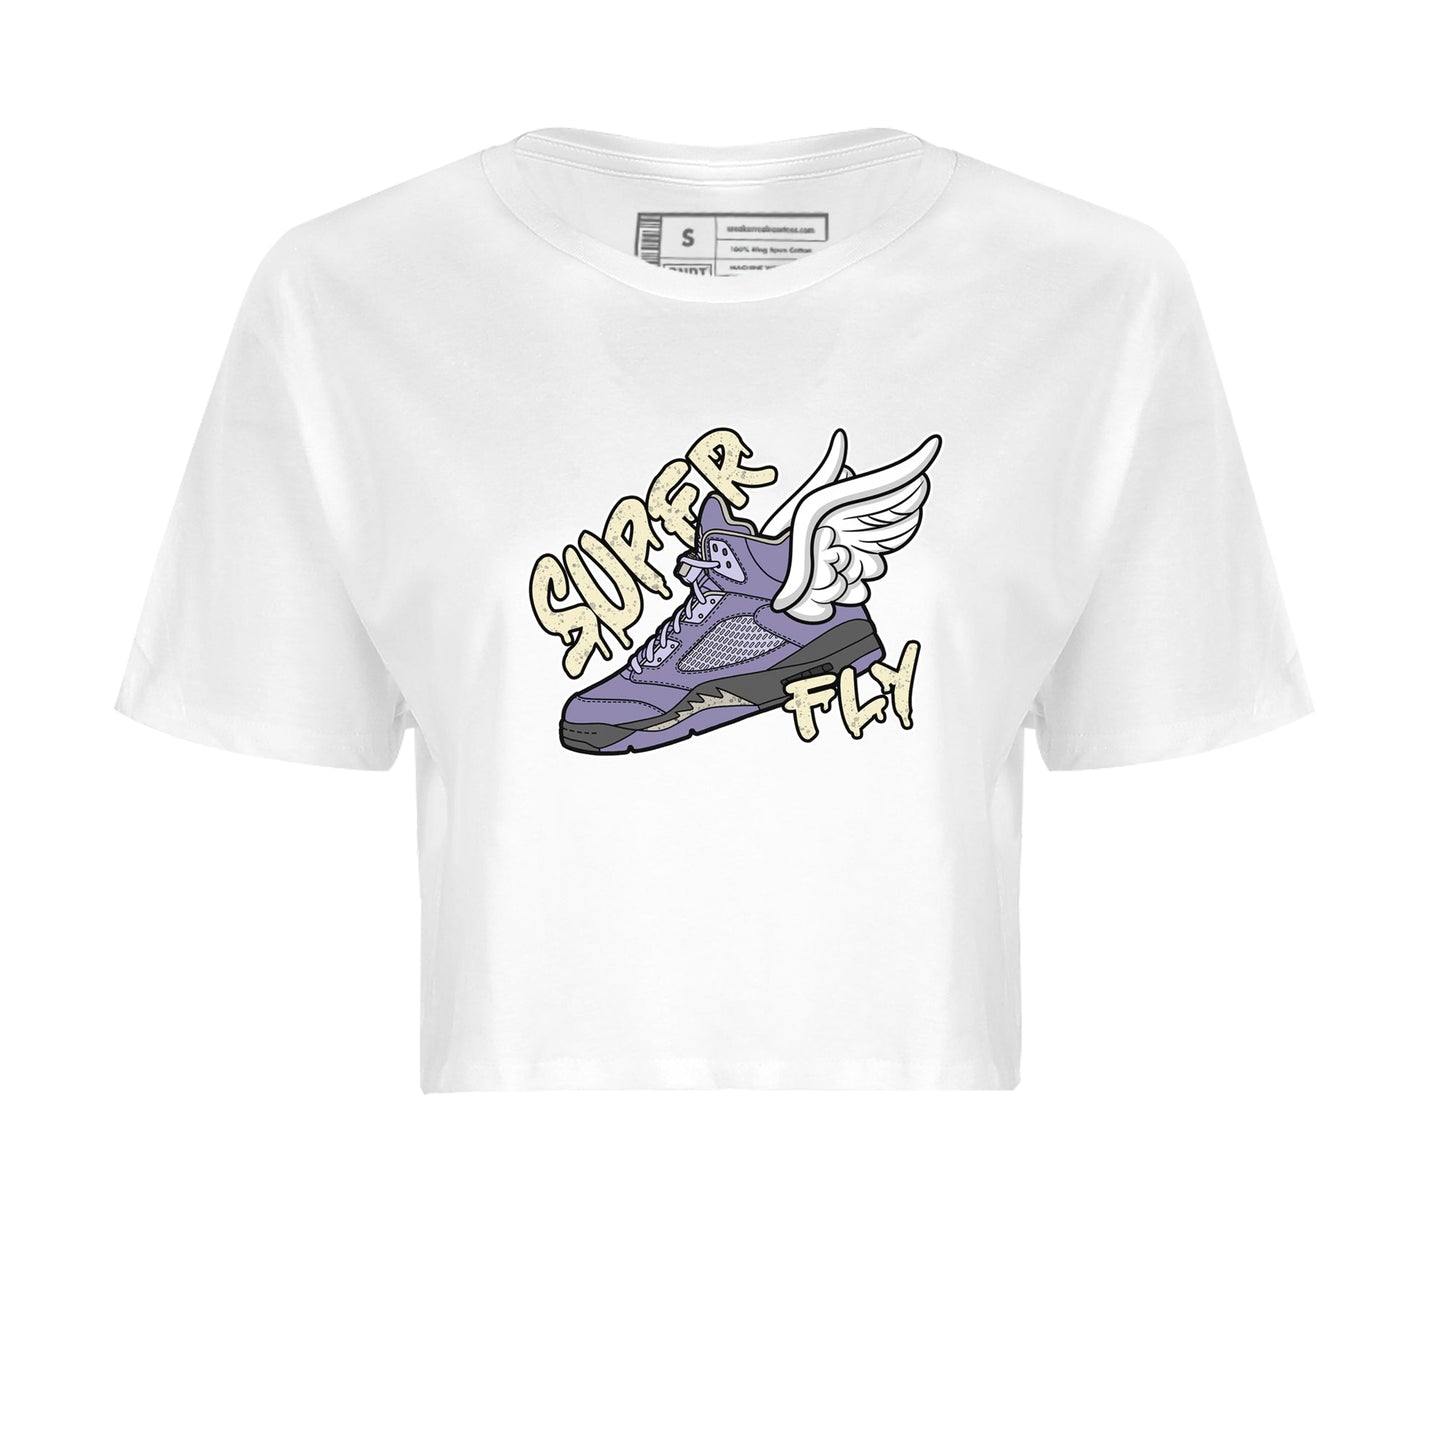 Air Jordan 5 Indigo Haze Sneaker Match Tees Super Fly Sneaker Tees AJ5 Indigo Haze Sneaker Release Tees Women's Shirts White 2